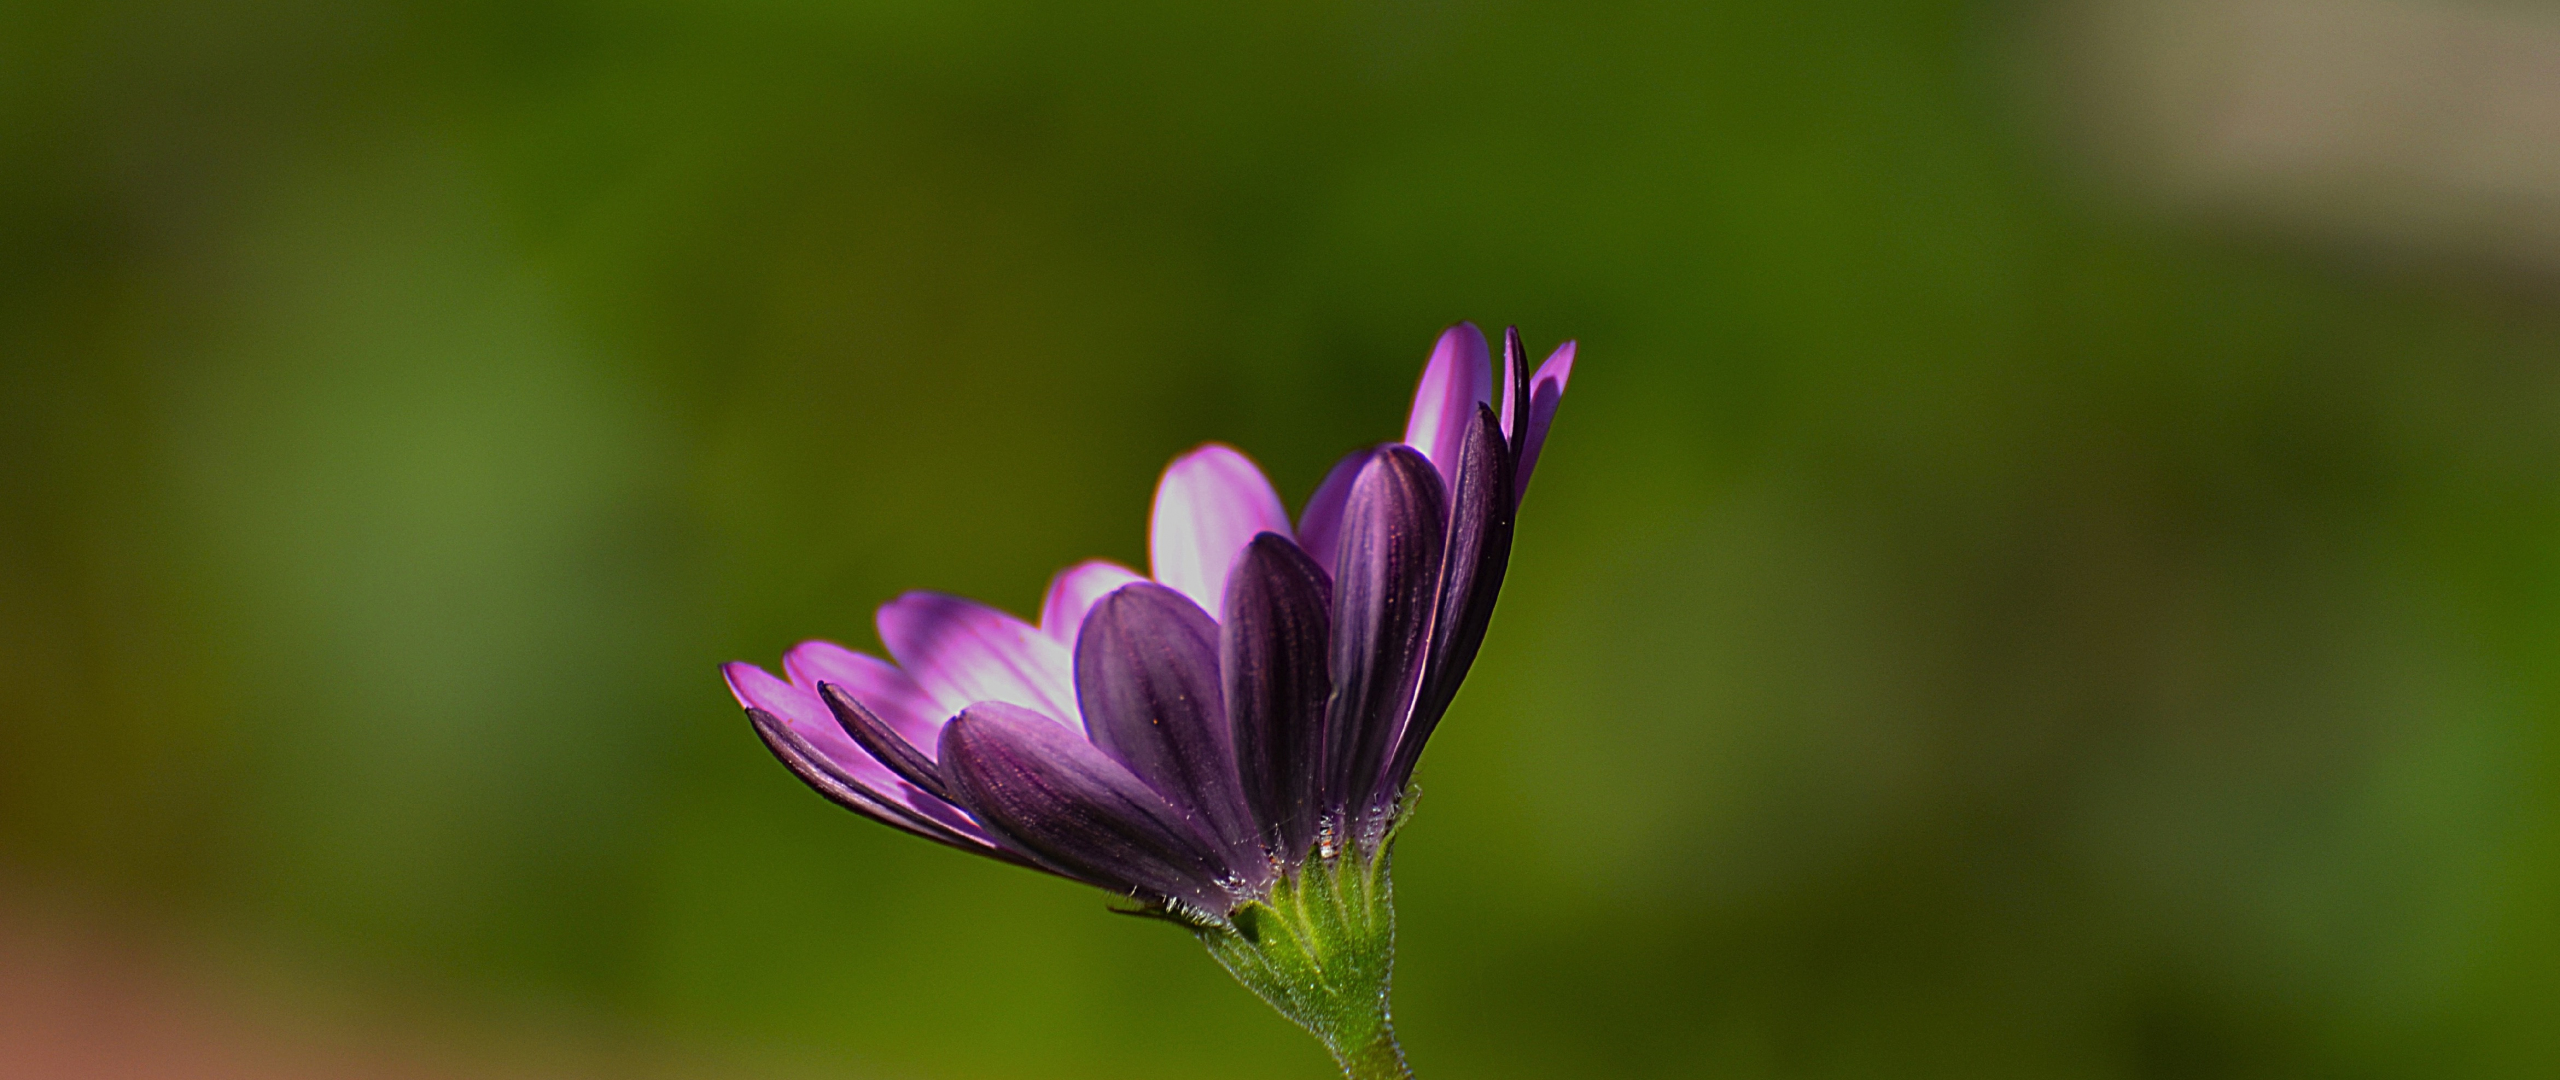 Download wallpaper 2560x1080 purple flower, close up, blur, bloom, dual ...